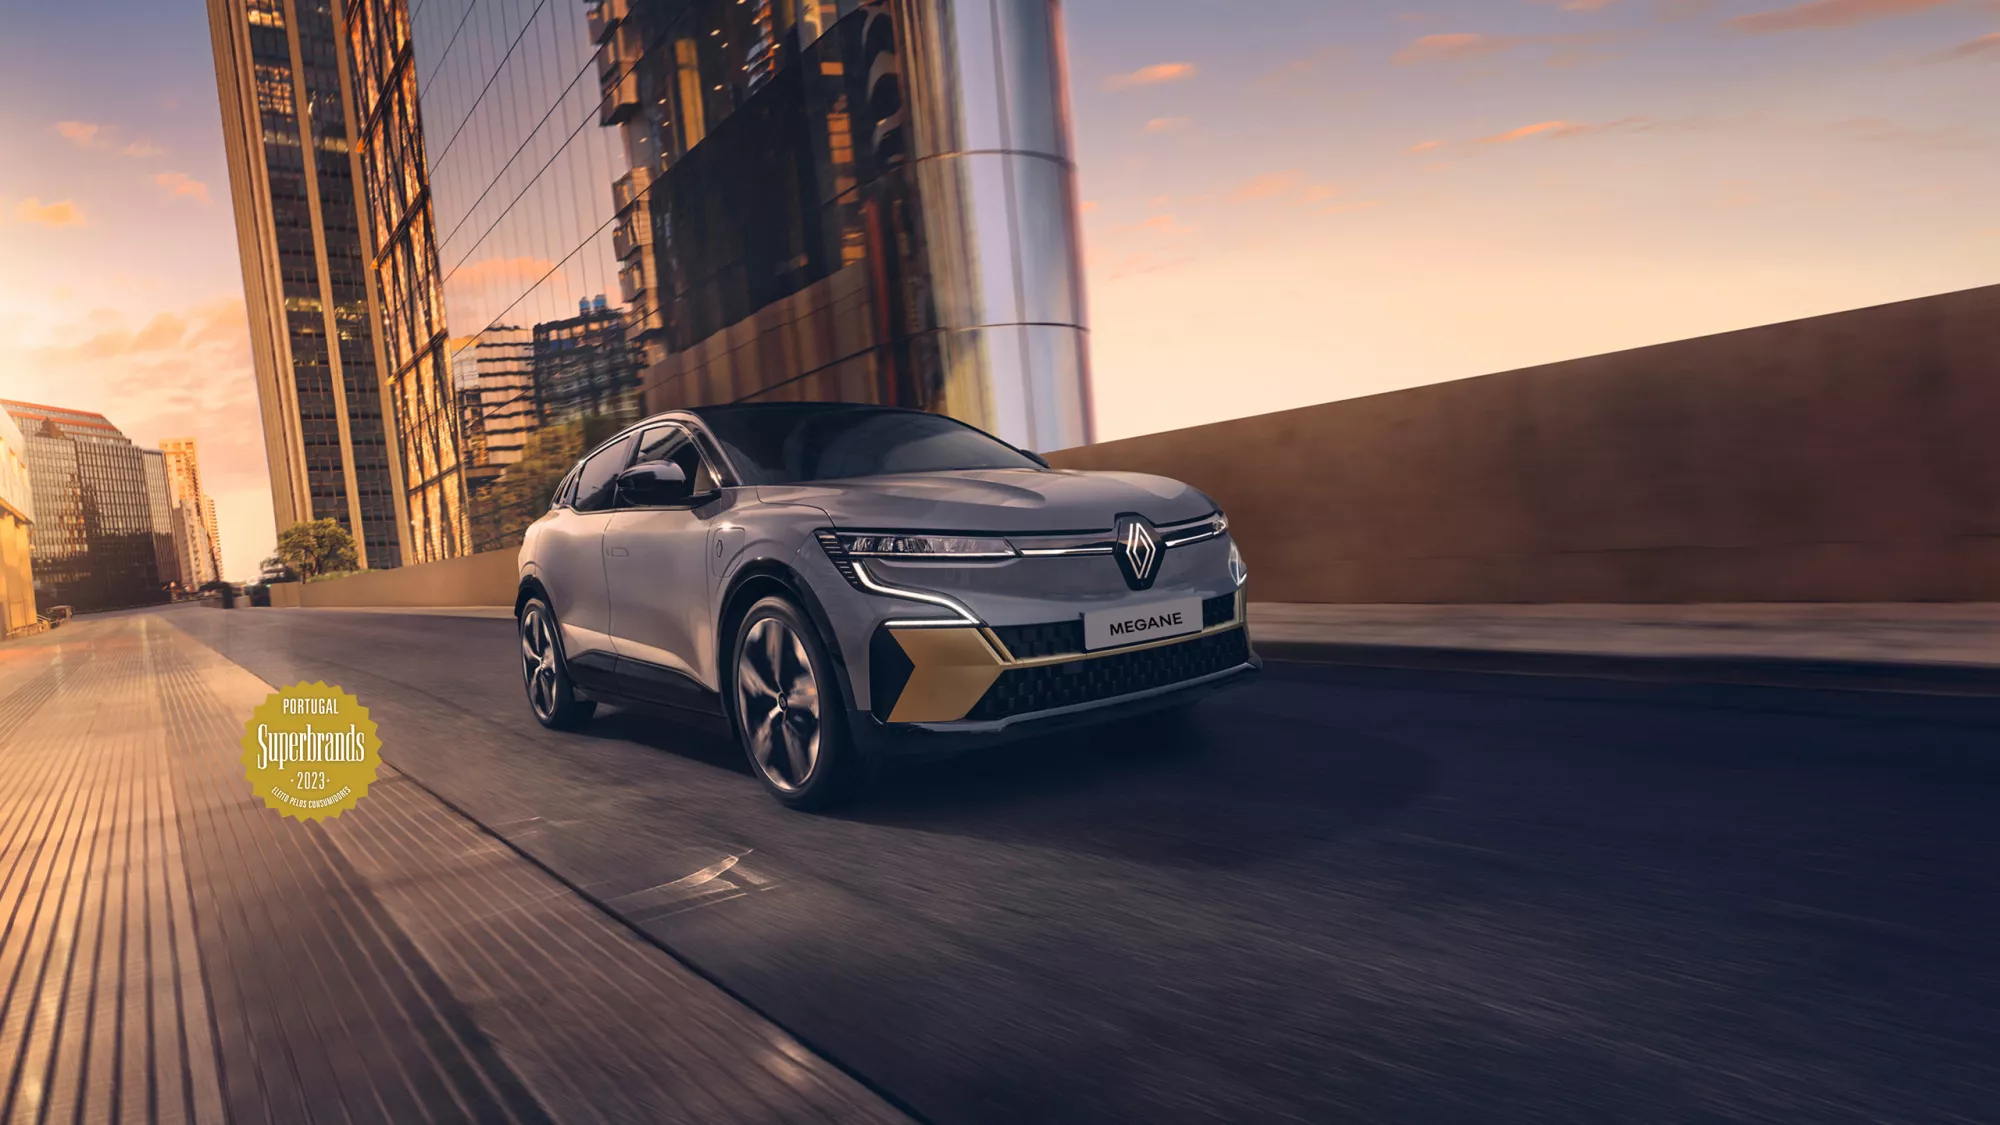 Renault eleita marca “Superbrands” pelos portugueses